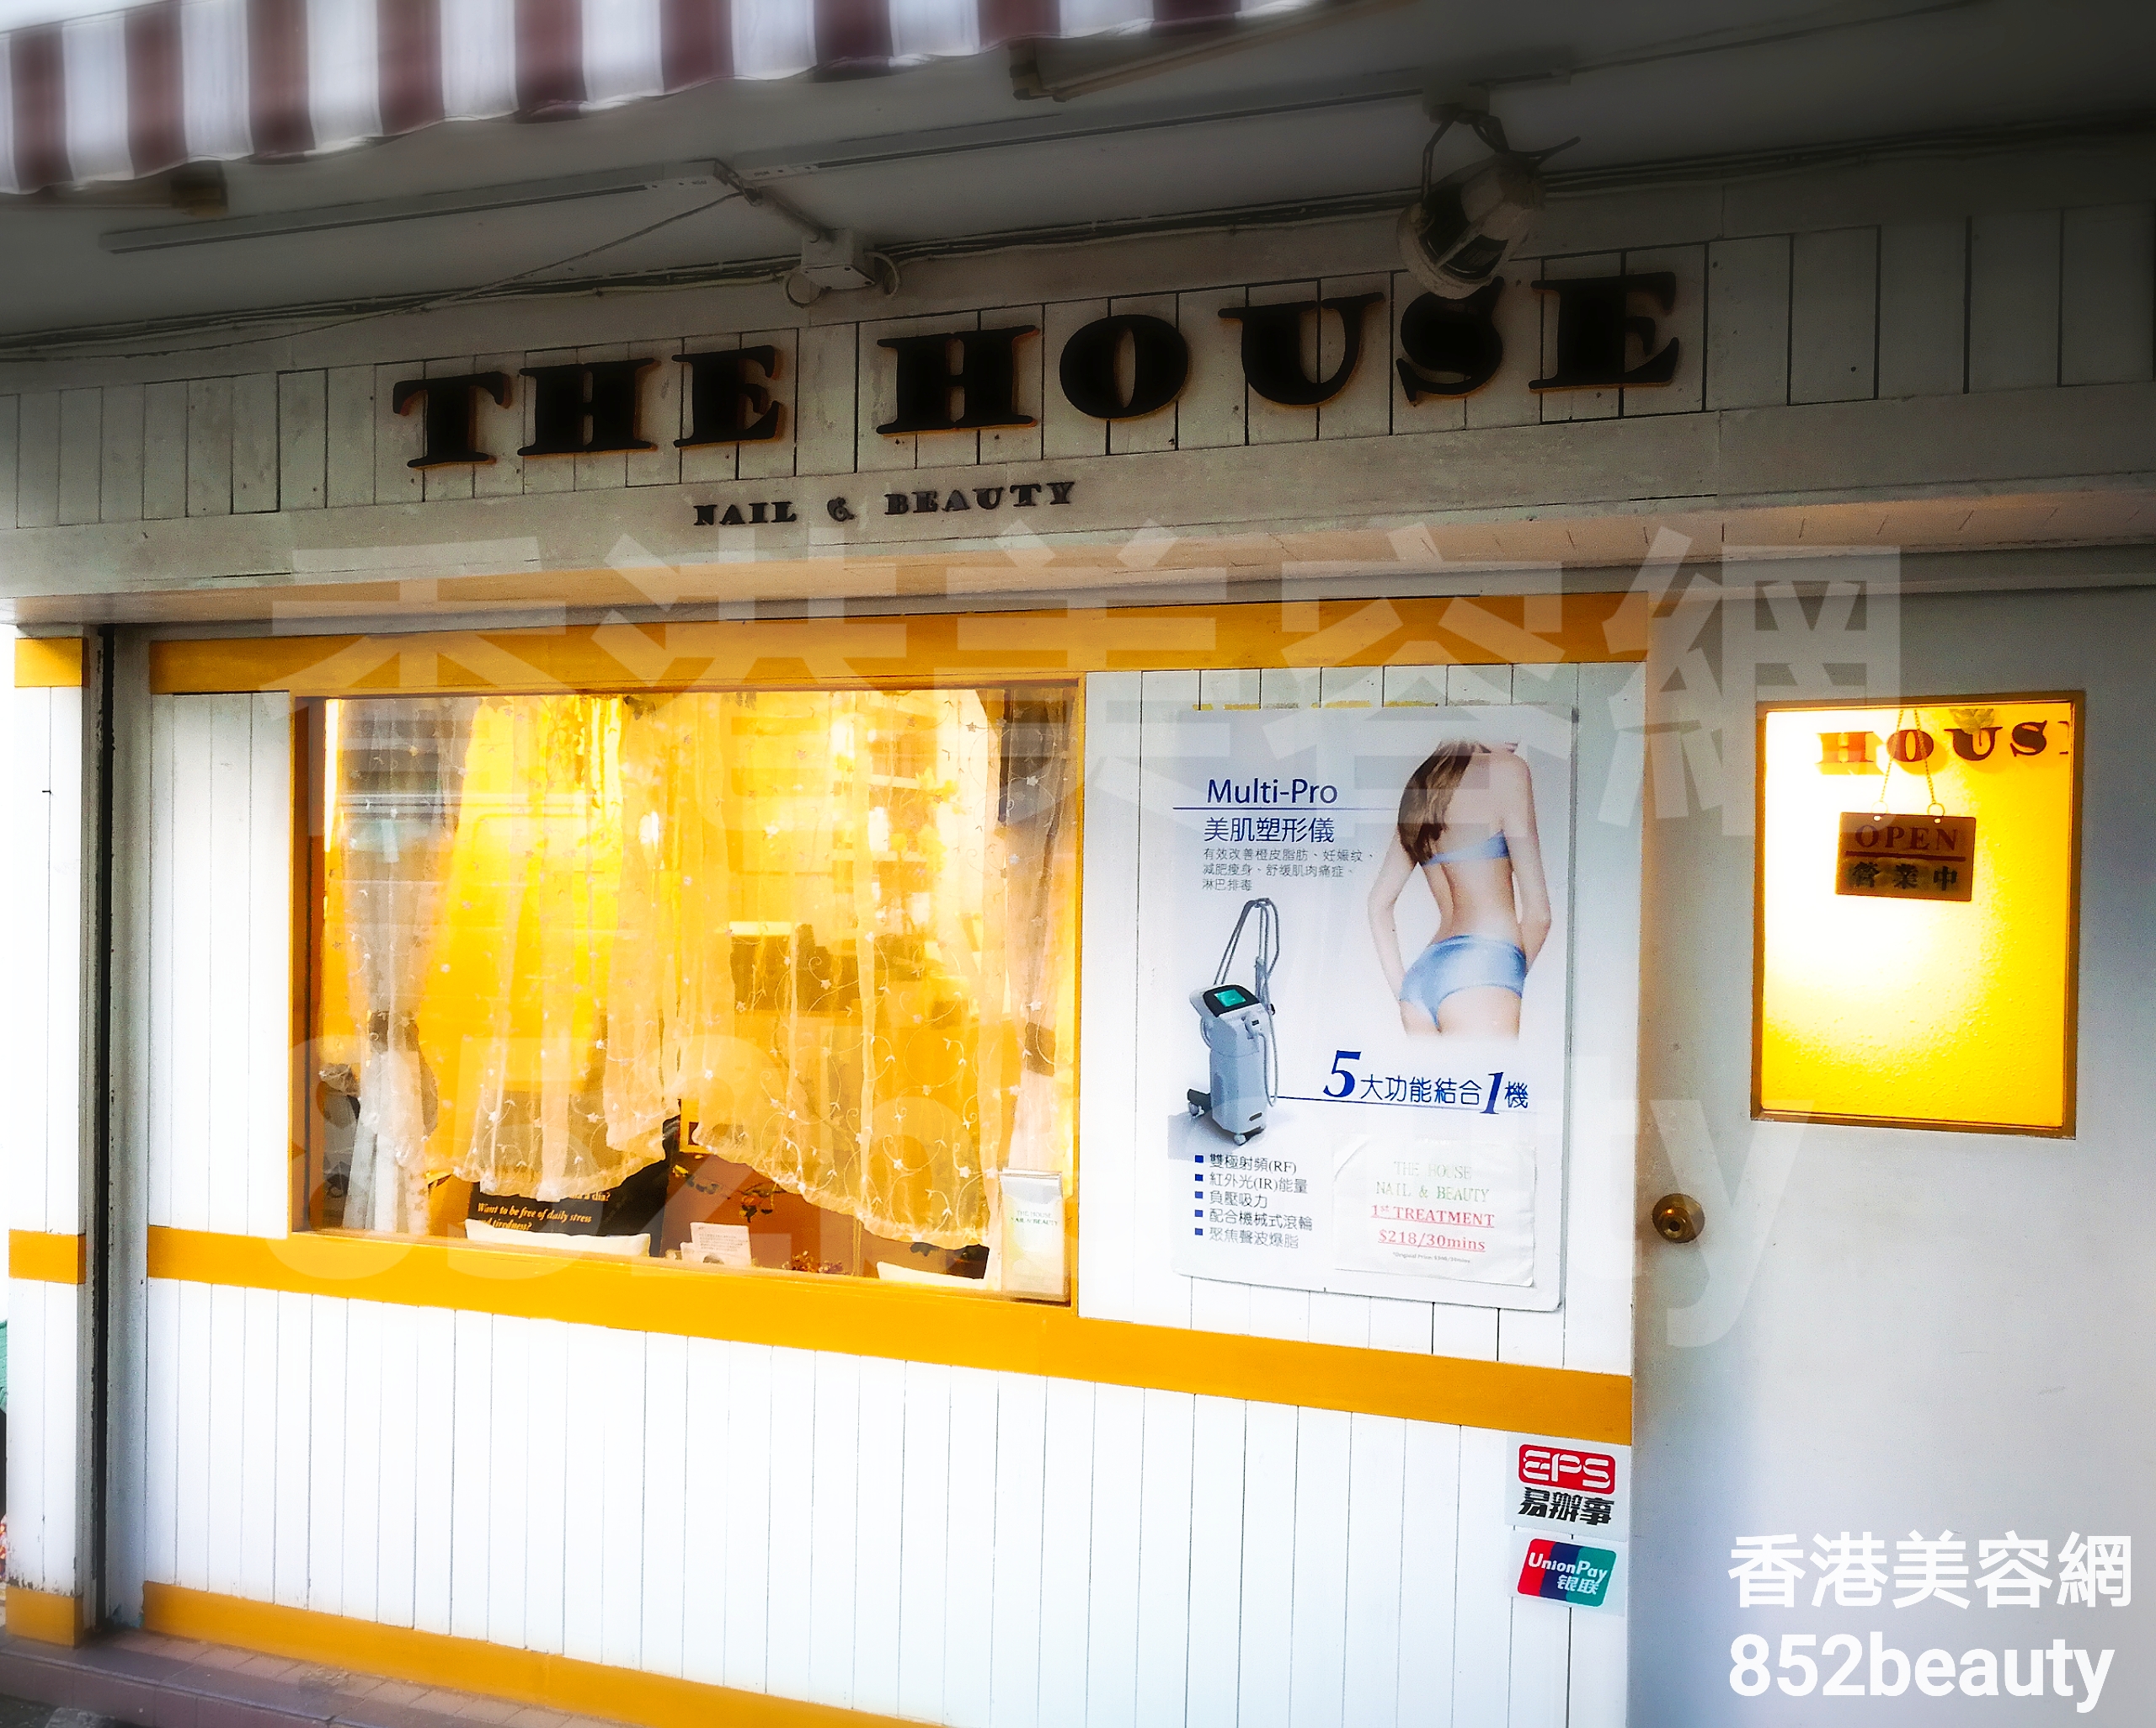 香港美容網 Hong Kong Beauty Salon 美容院 / 美容師: THE HOUSE NAIL & BEAUTY